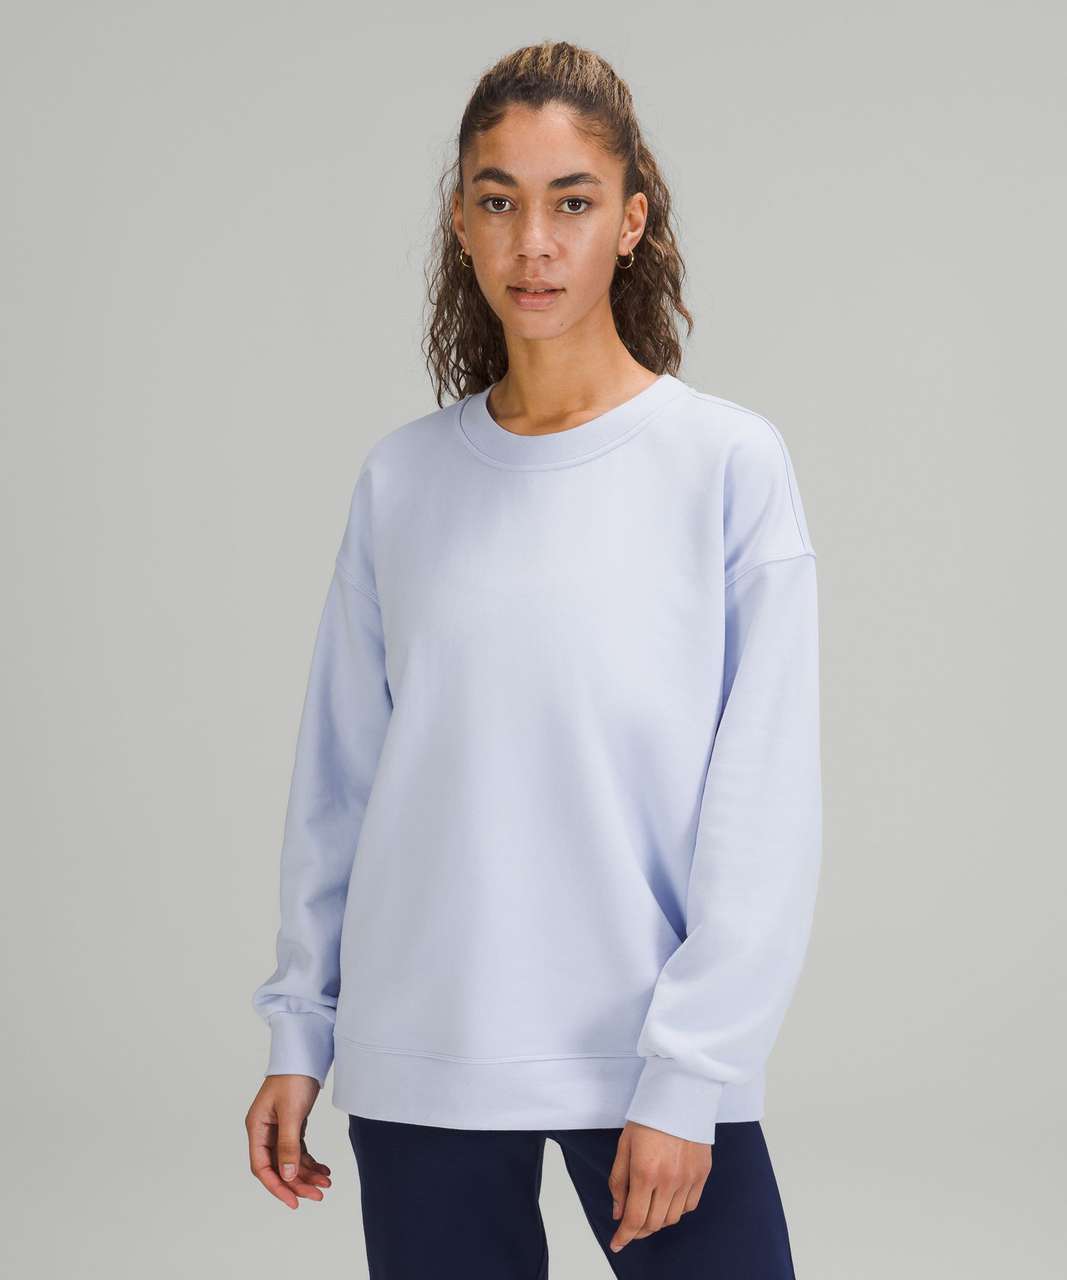 Periwinkle Blue Pullover - Crew Neck Sweatshirt - Women's Tops - Lulus